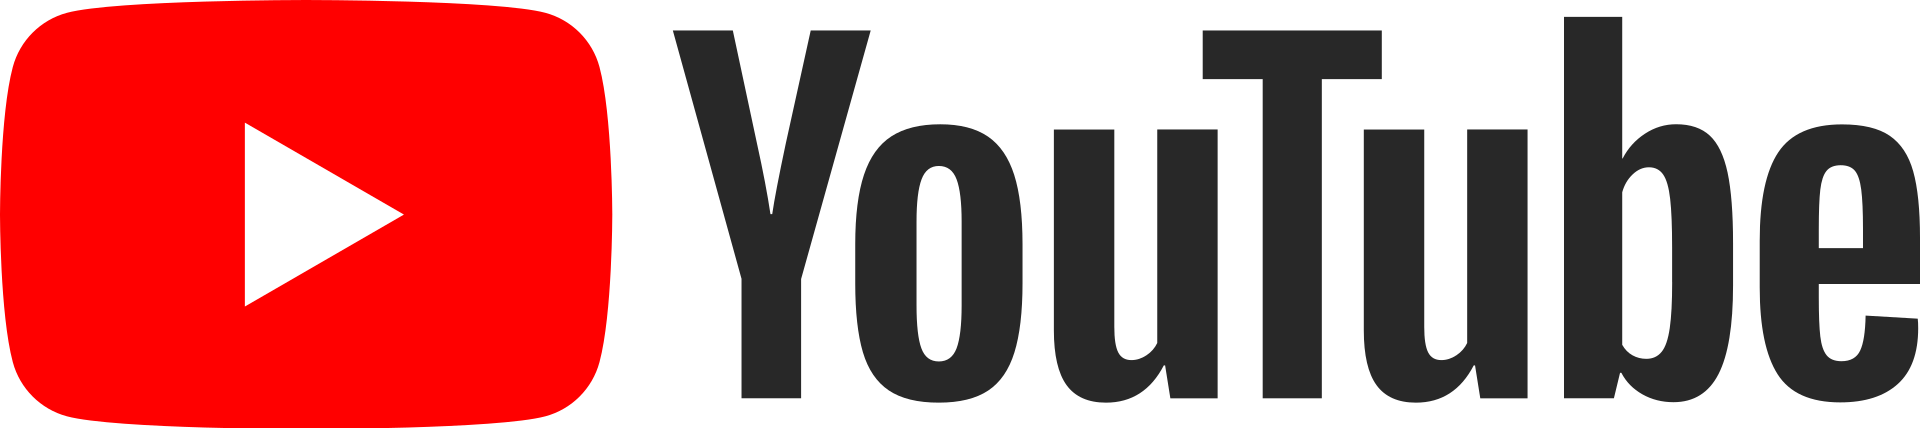 YouTube_Logo_2017